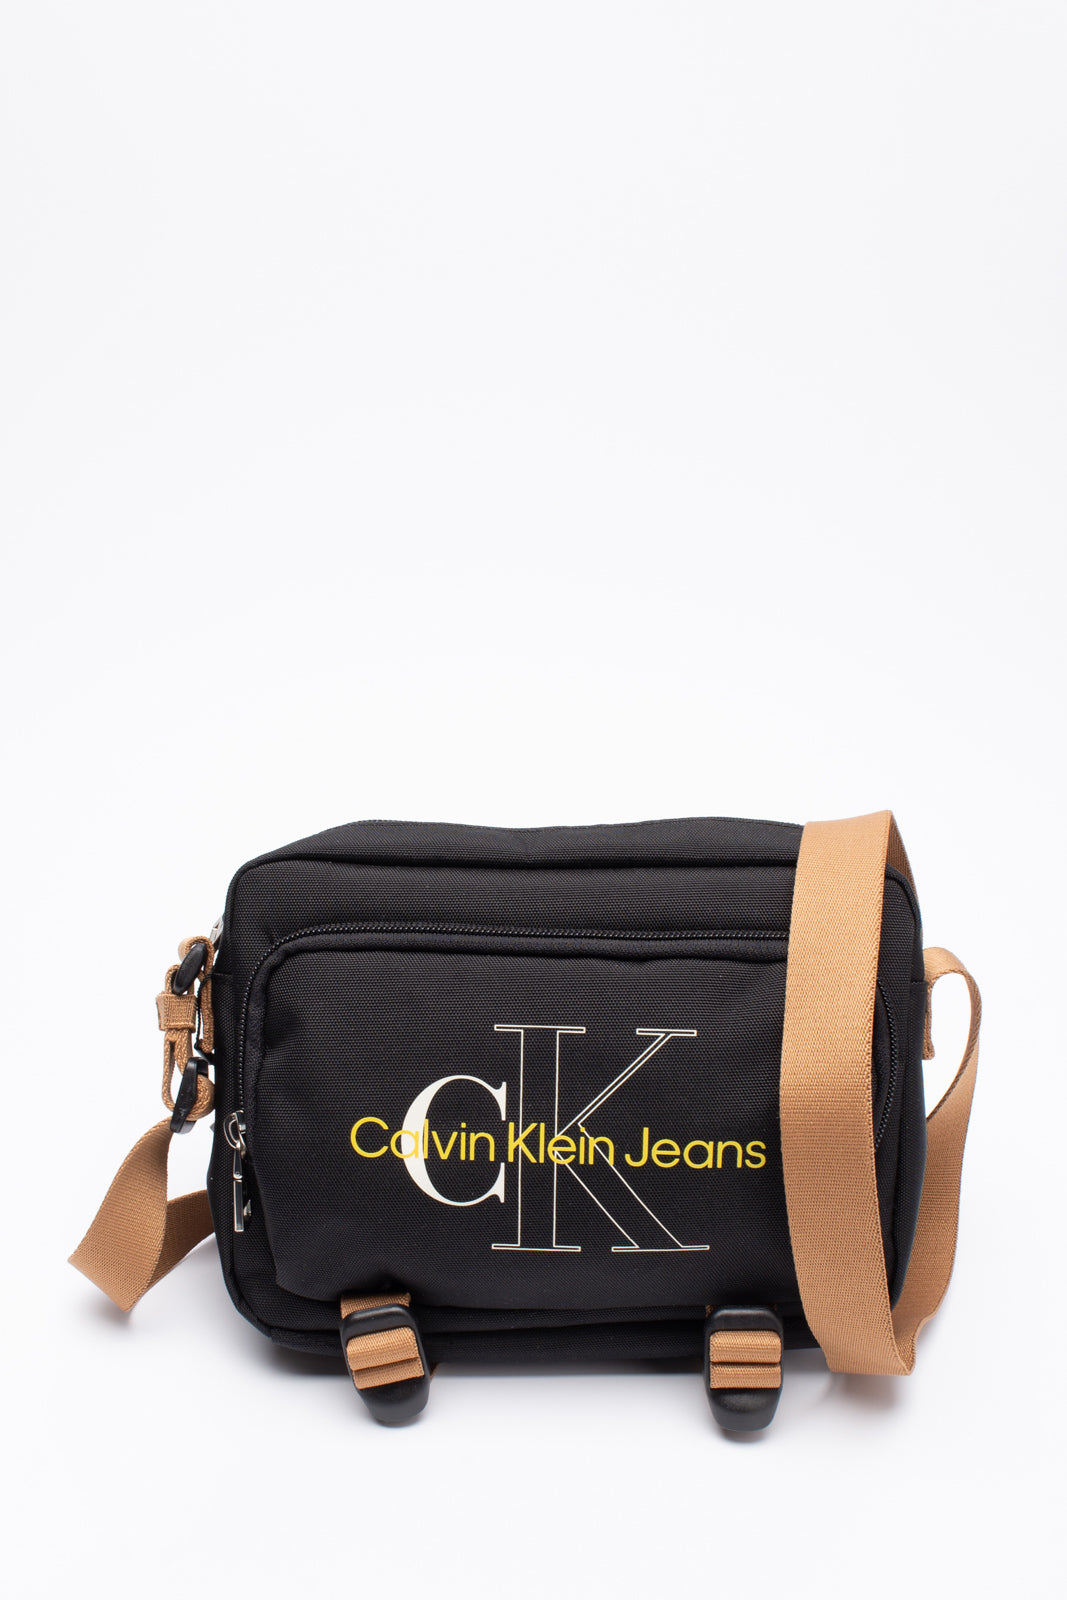 Auctions Recycled Adjusta Fabric Bag KLEIN CALVIN –POPPRI JEANS Fashion Online Design Sports Crossbody